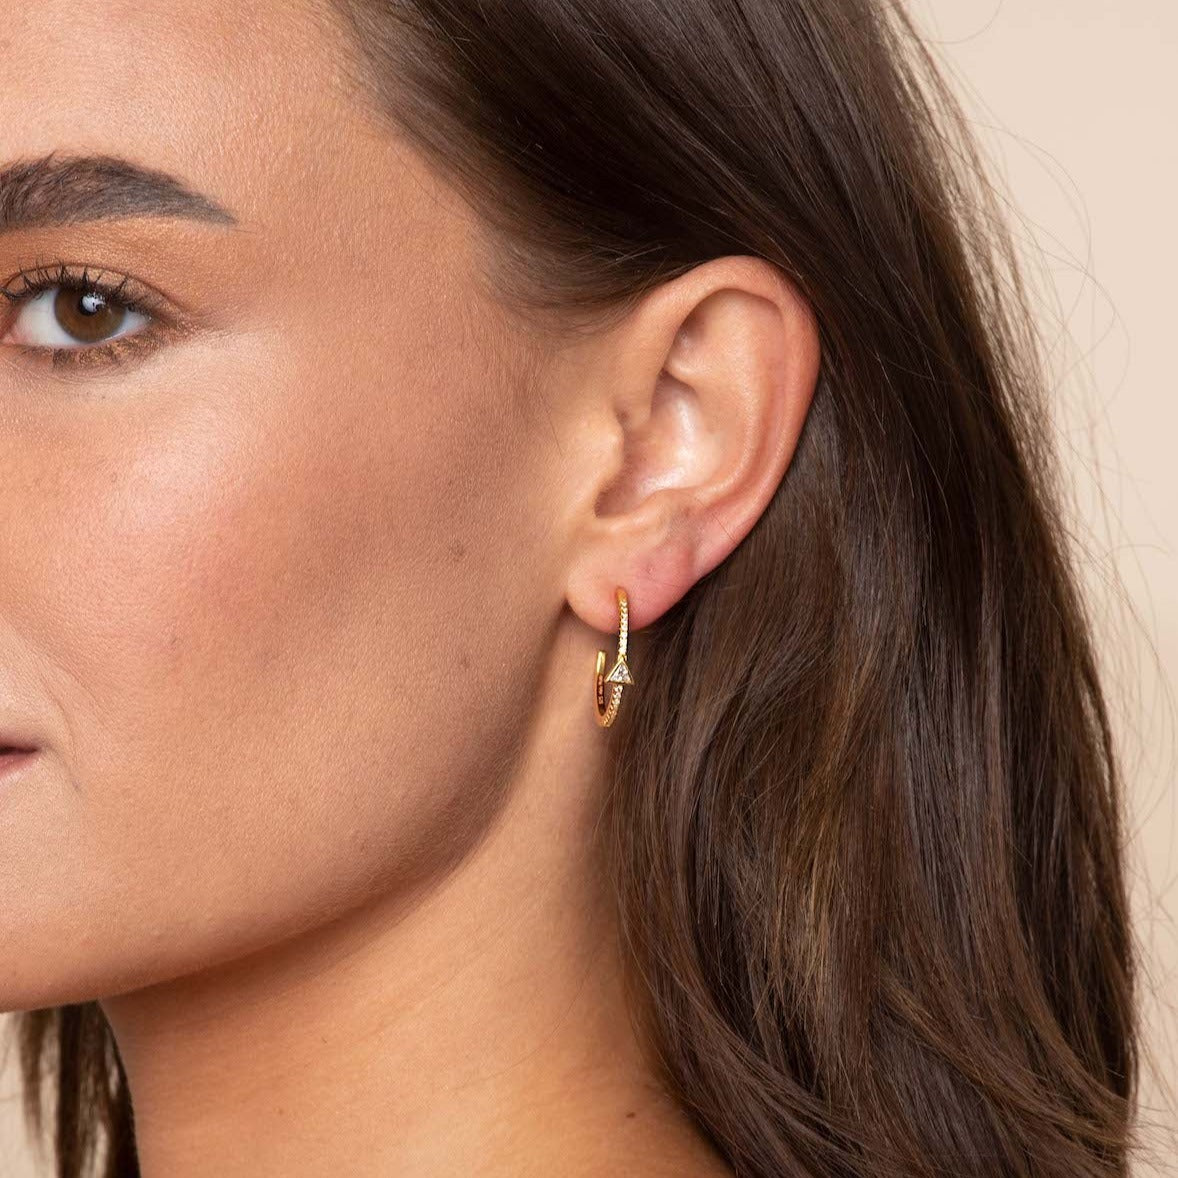 Ava earrings - gold plated